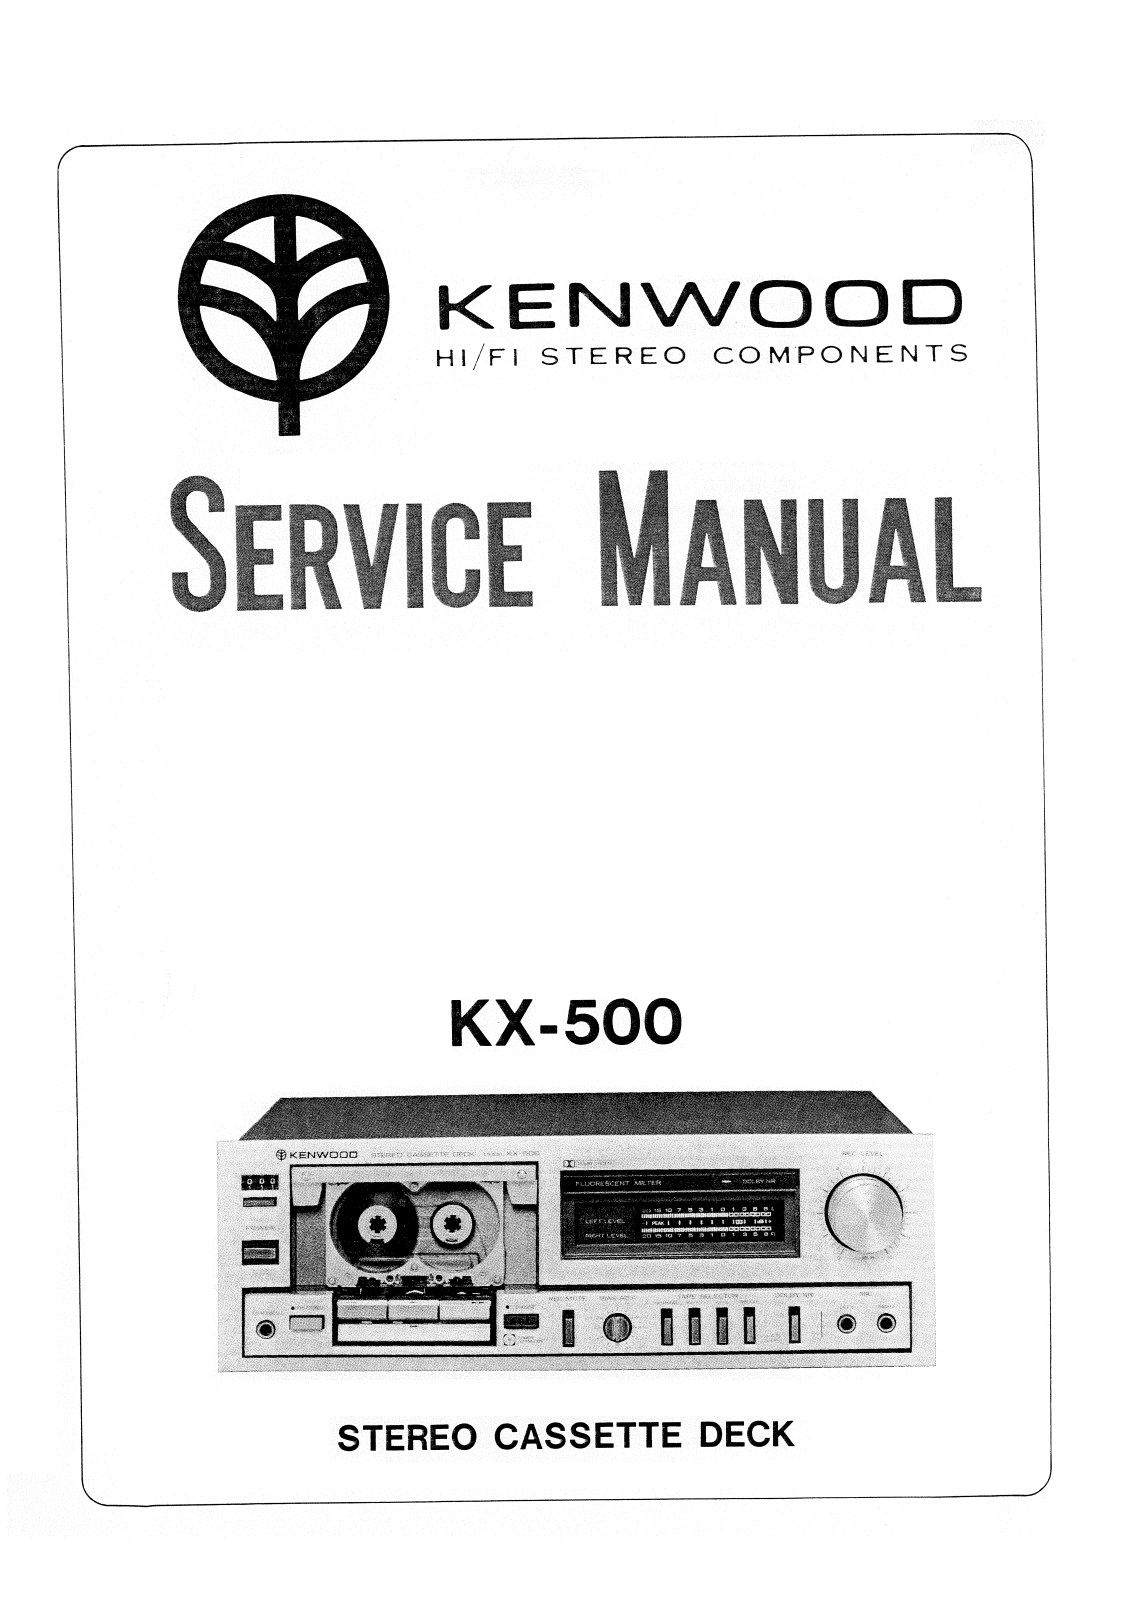 Kenwood KX-500 Service Manual